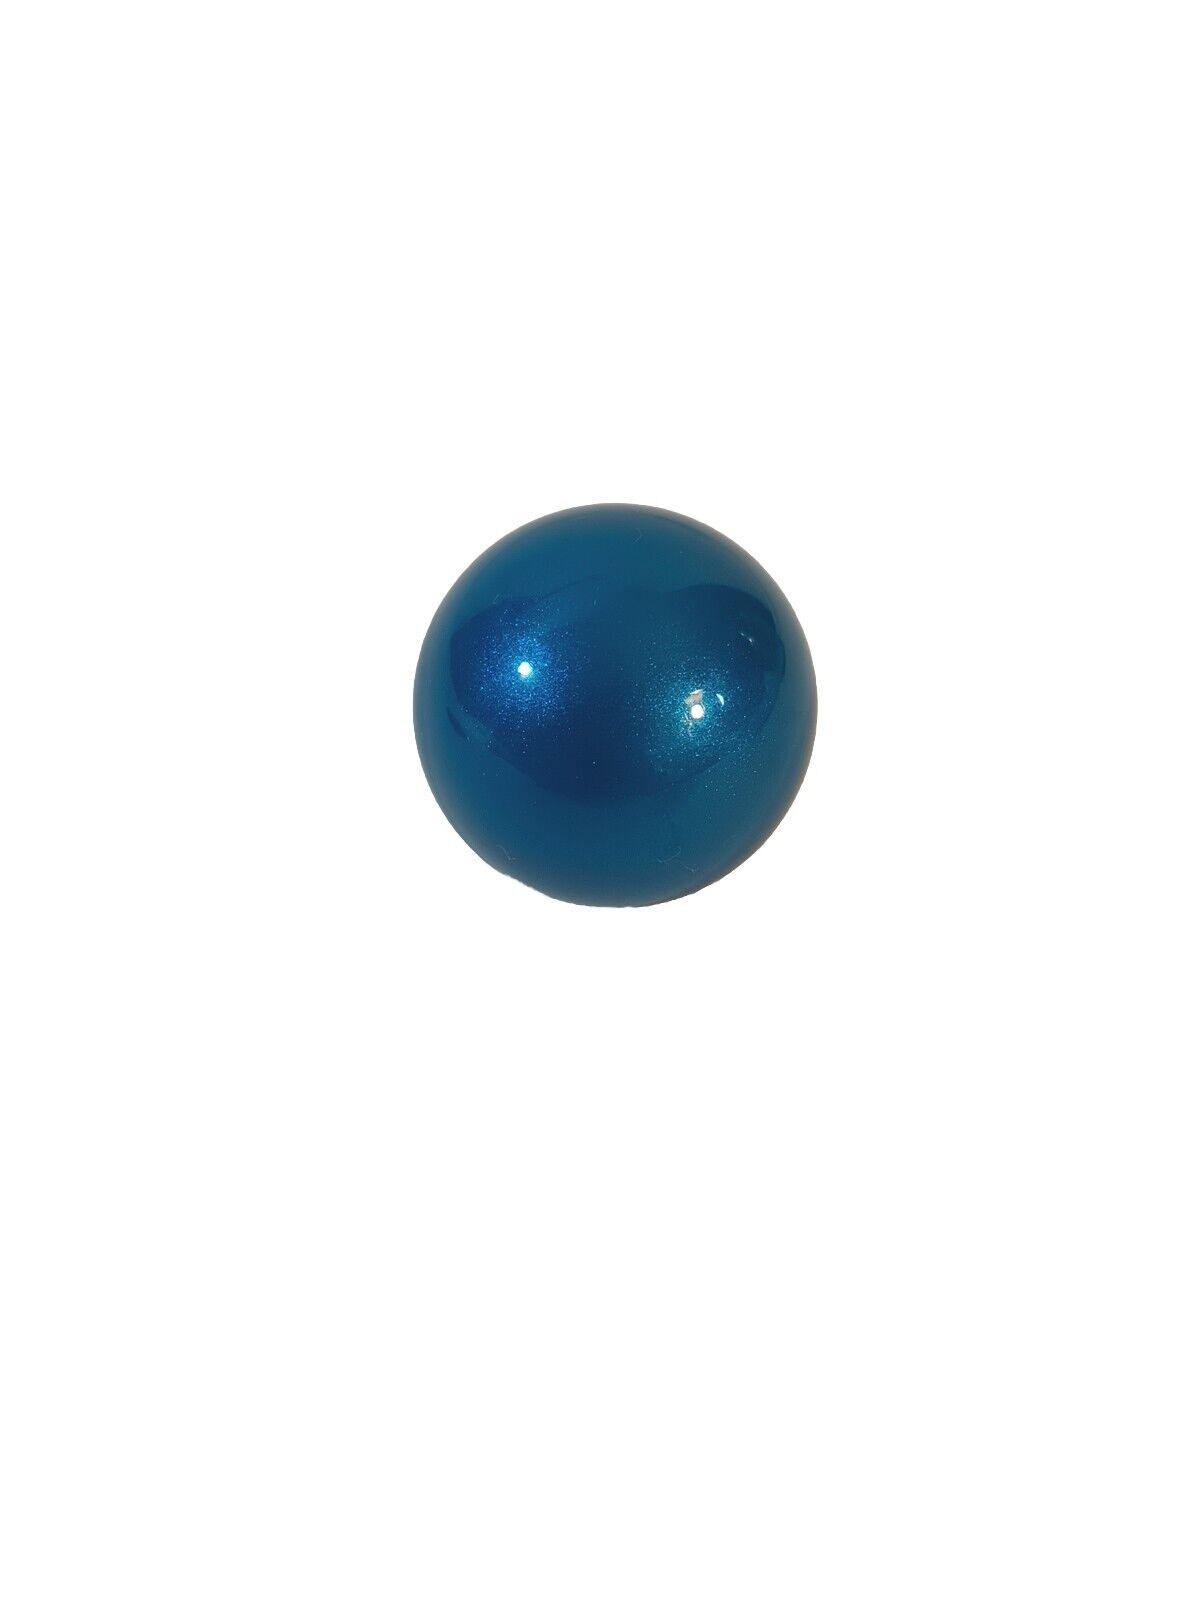 Genuine Logitech M570 Wireless Trackball Replacement Ball OEM Original